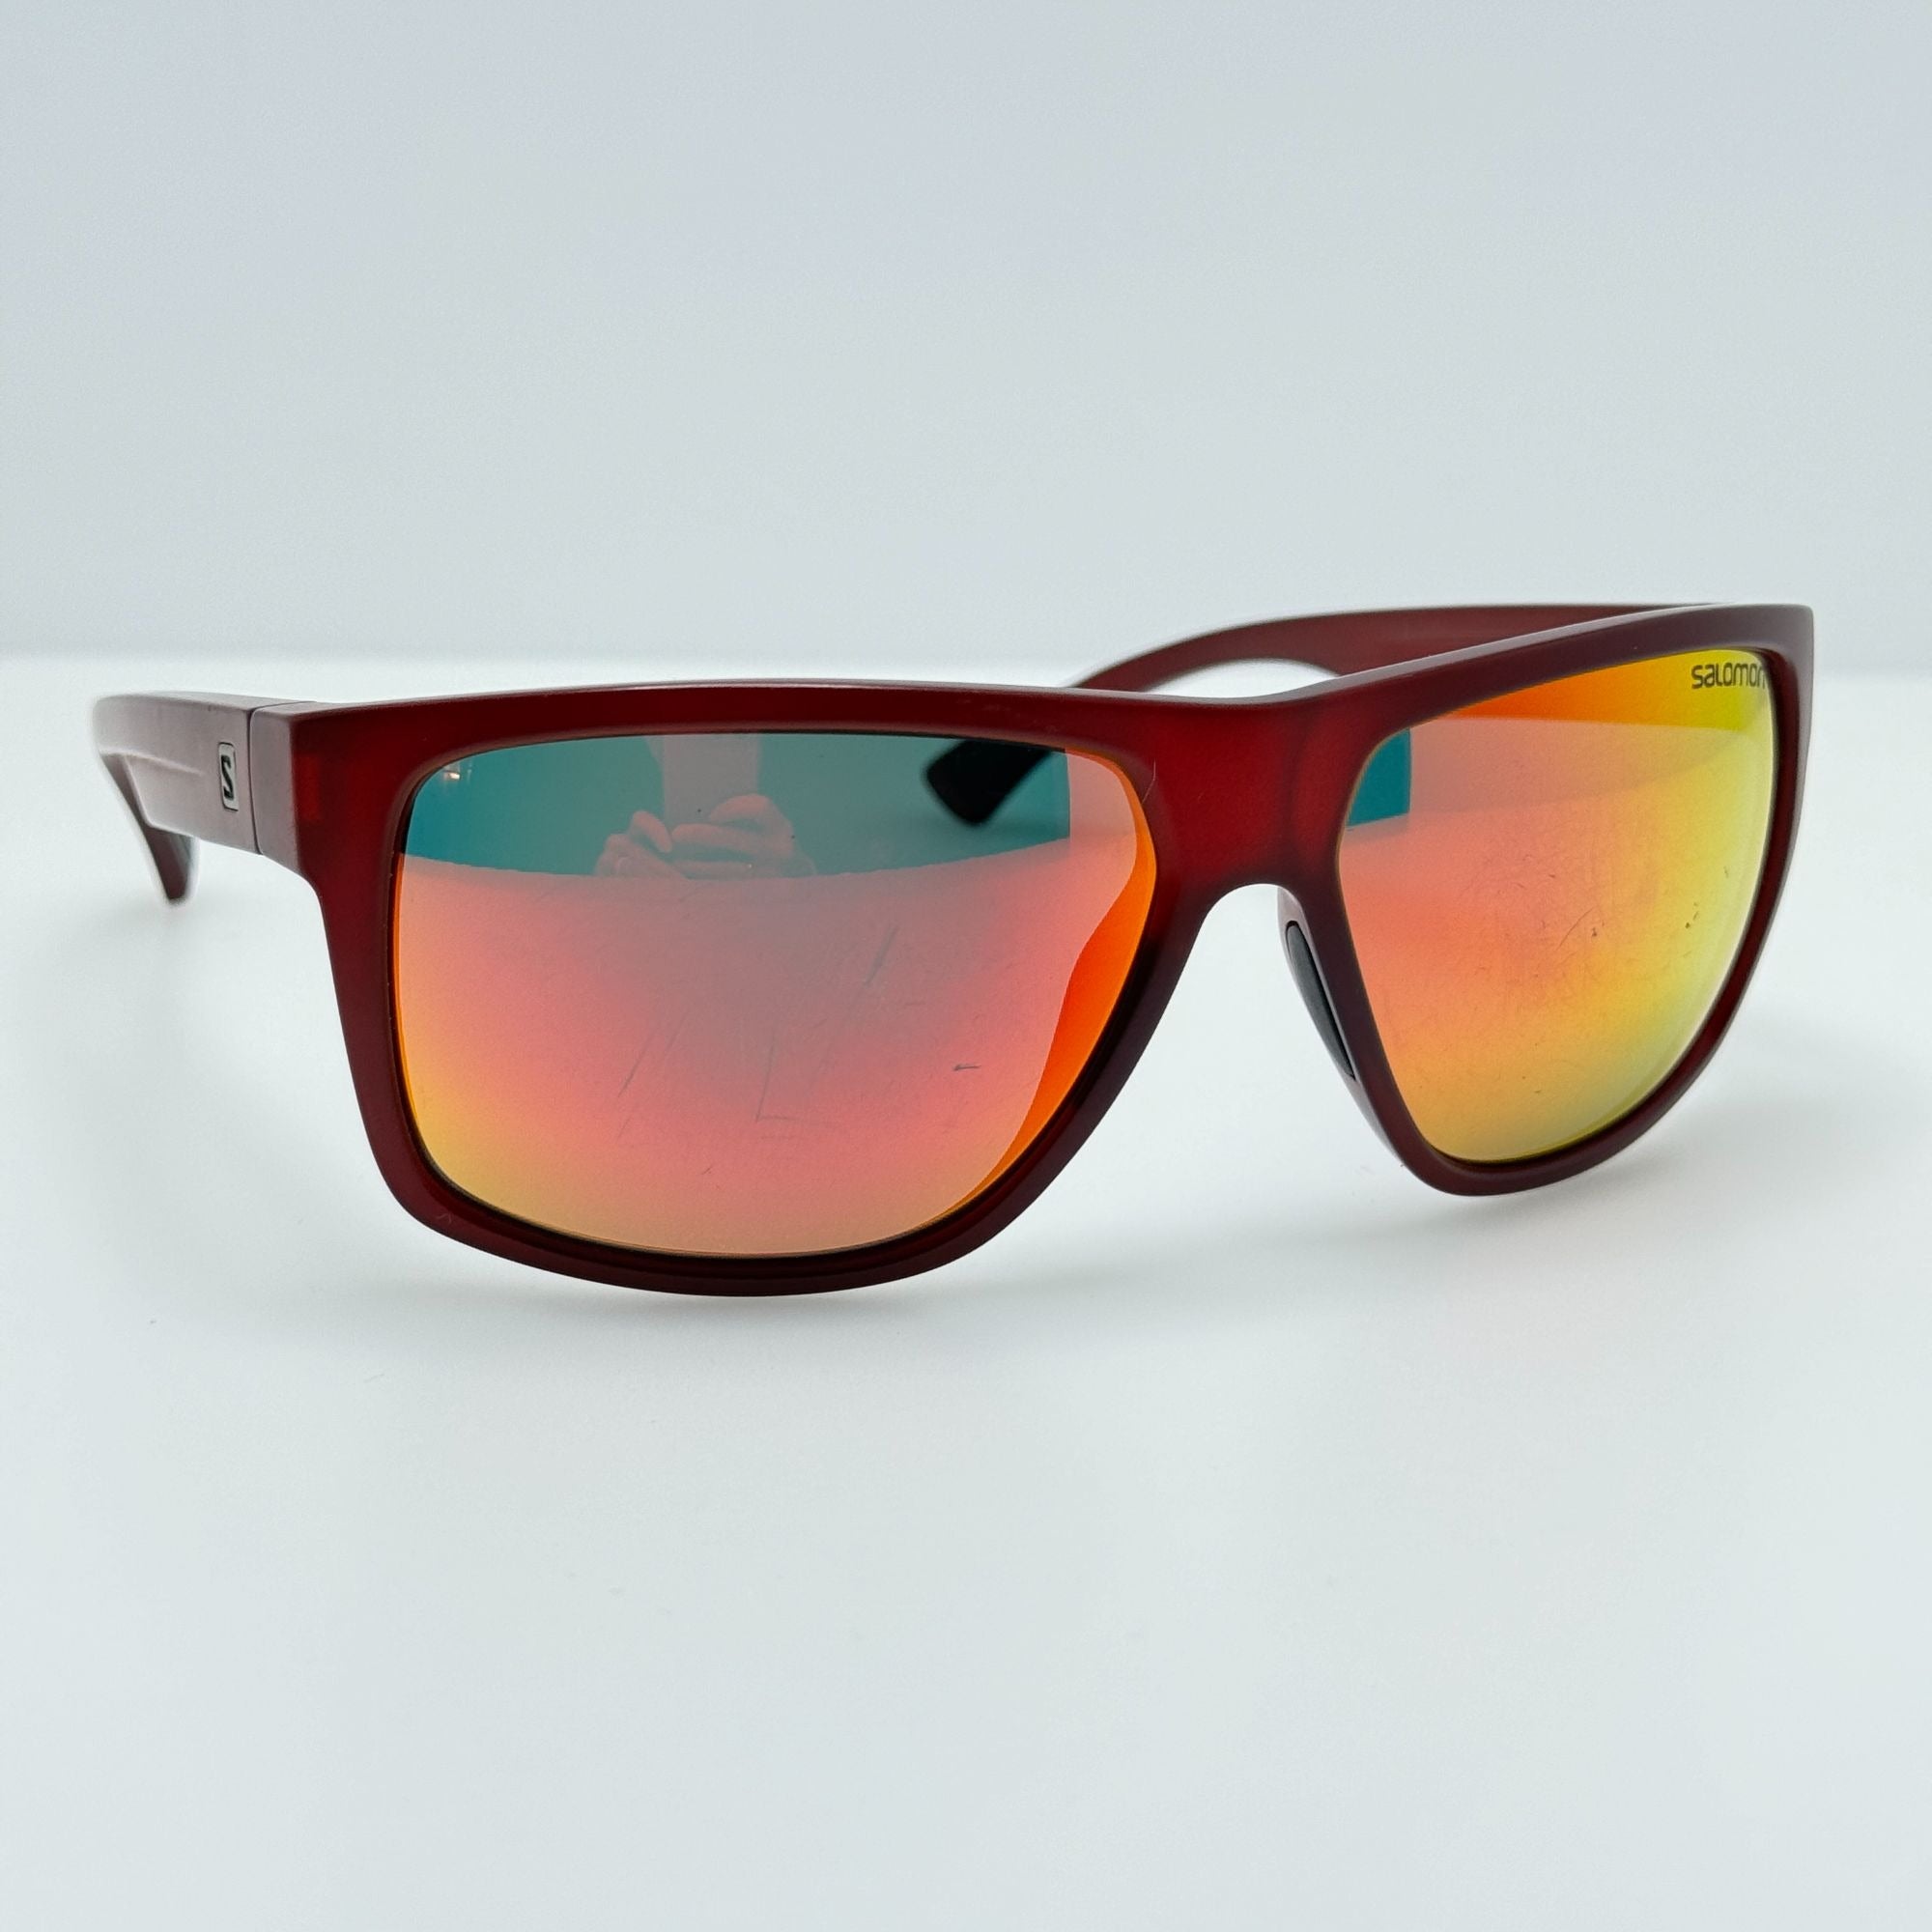 Salomon-Sunglasses-408209-Jonku-Polarized-Italy-Sunglasses